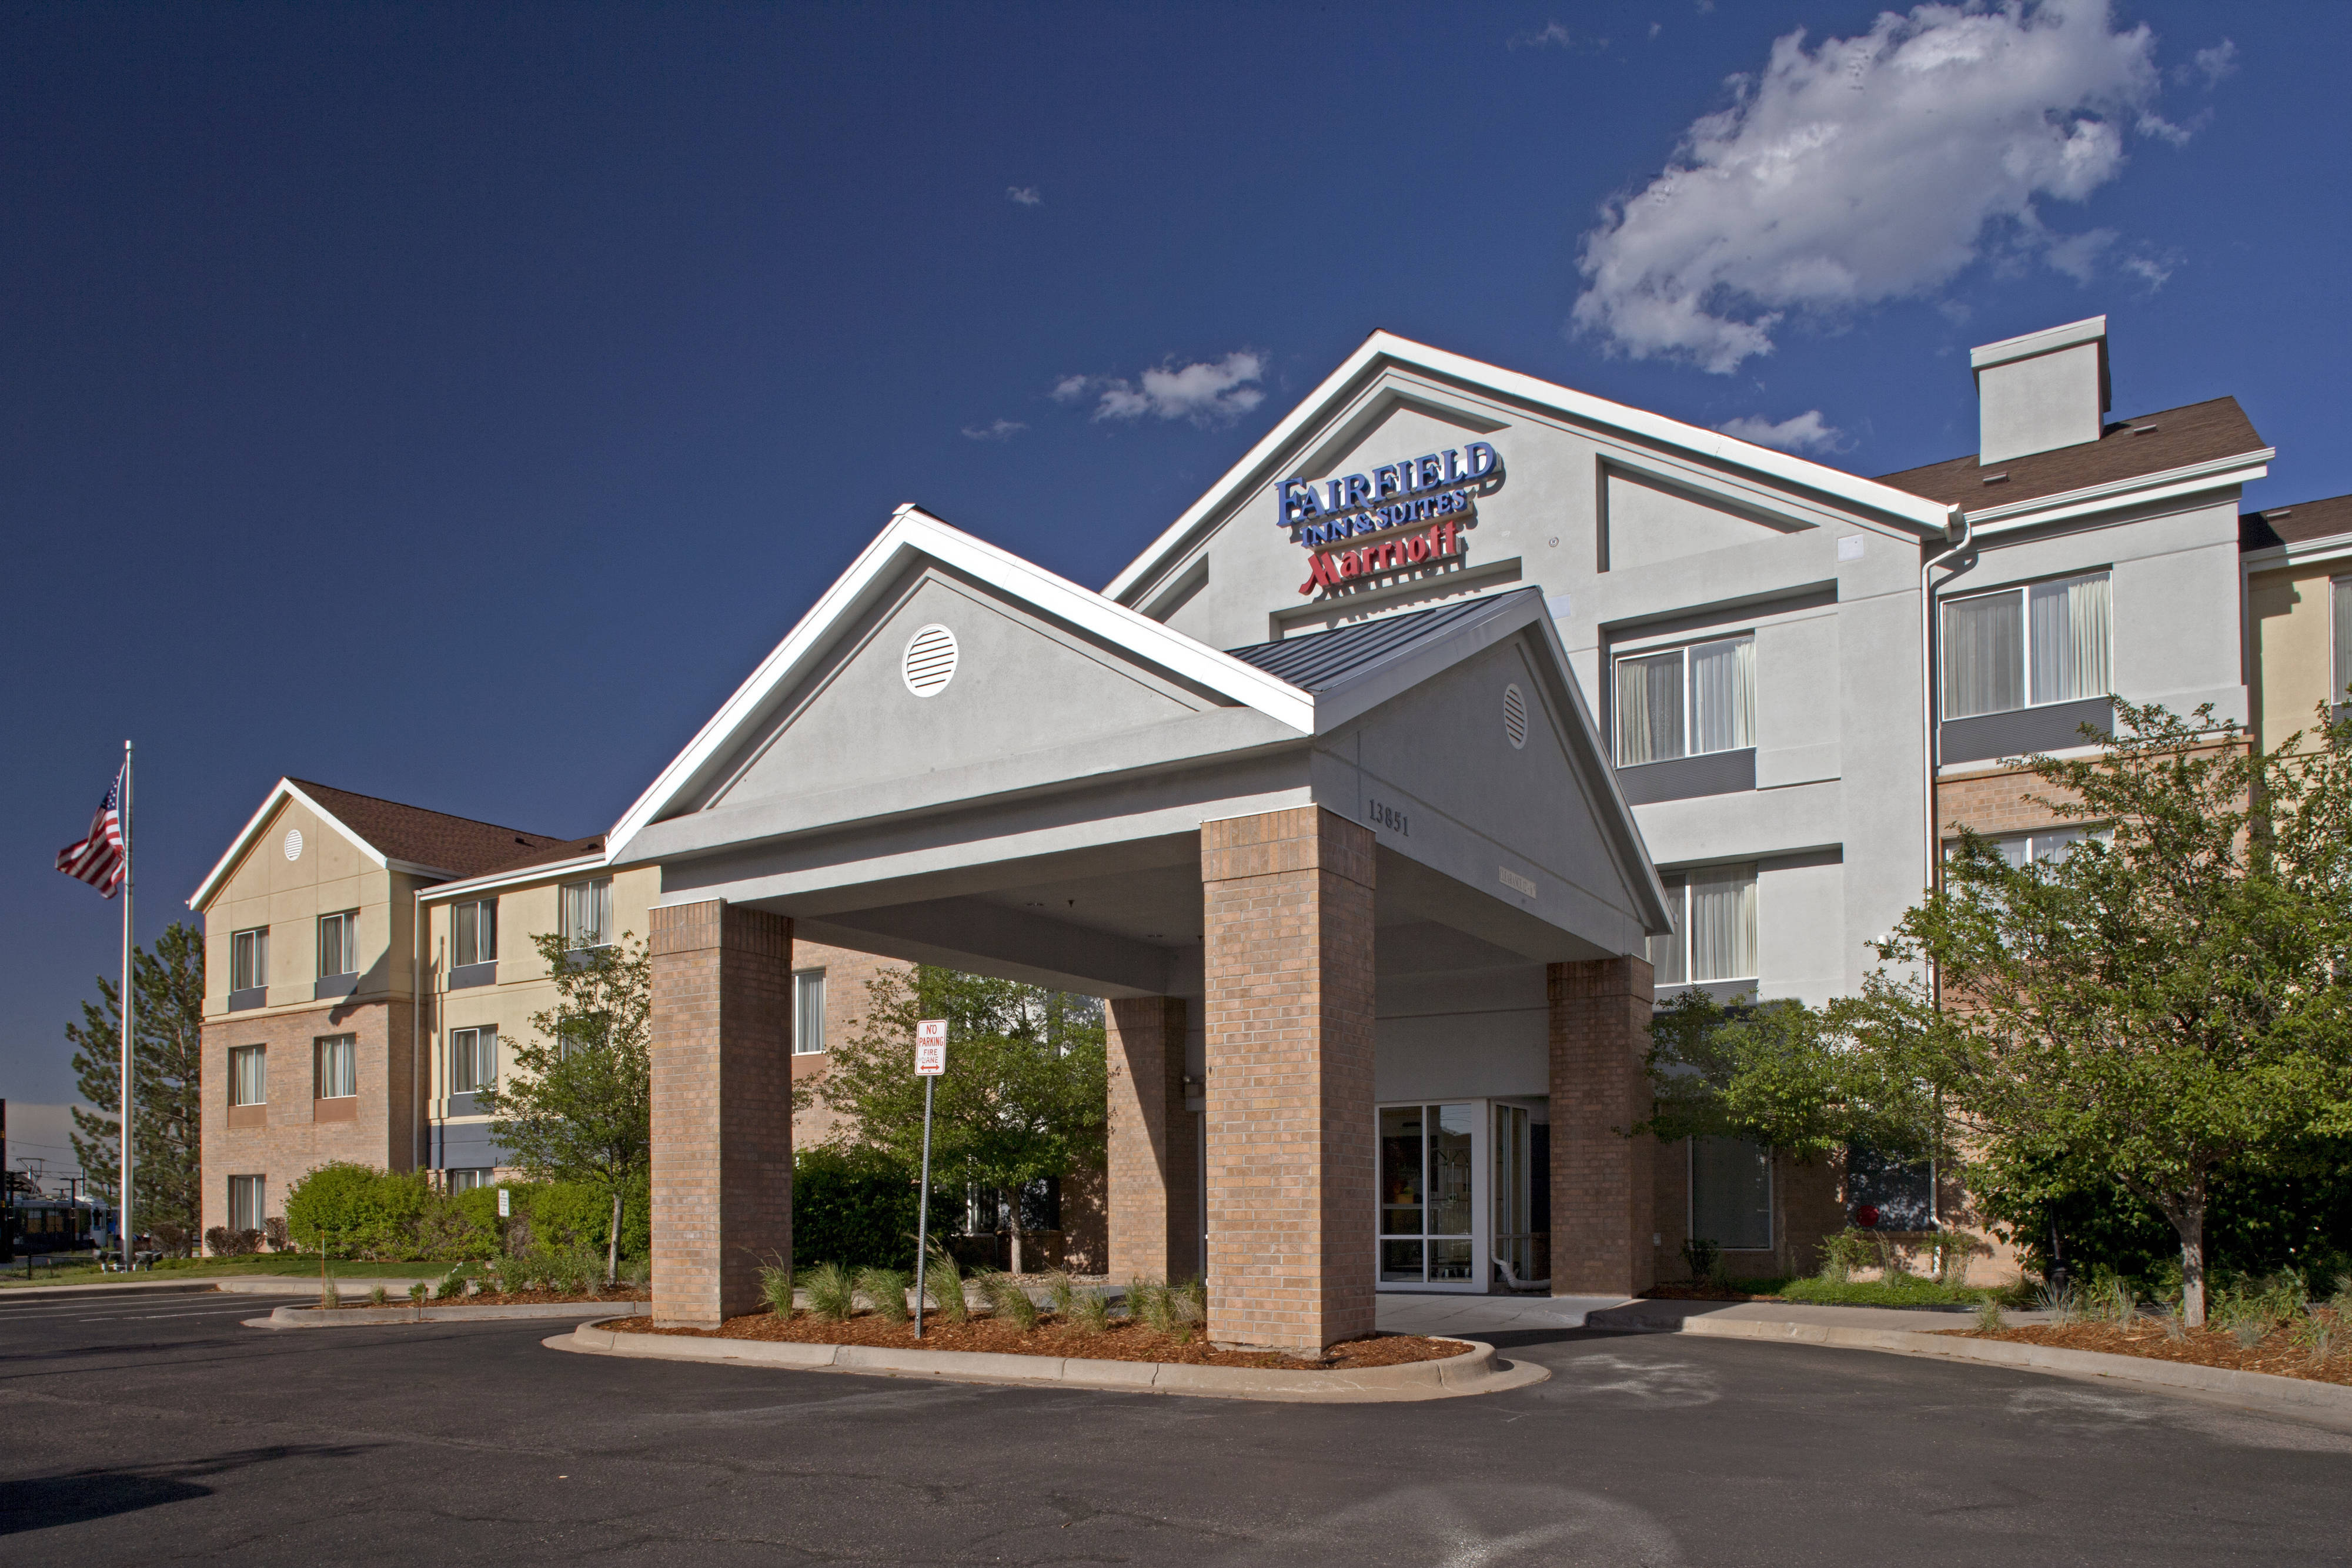 Photo of Fairfield Inn & Suites Denver Aurora/Medical Center, Aurora, CO